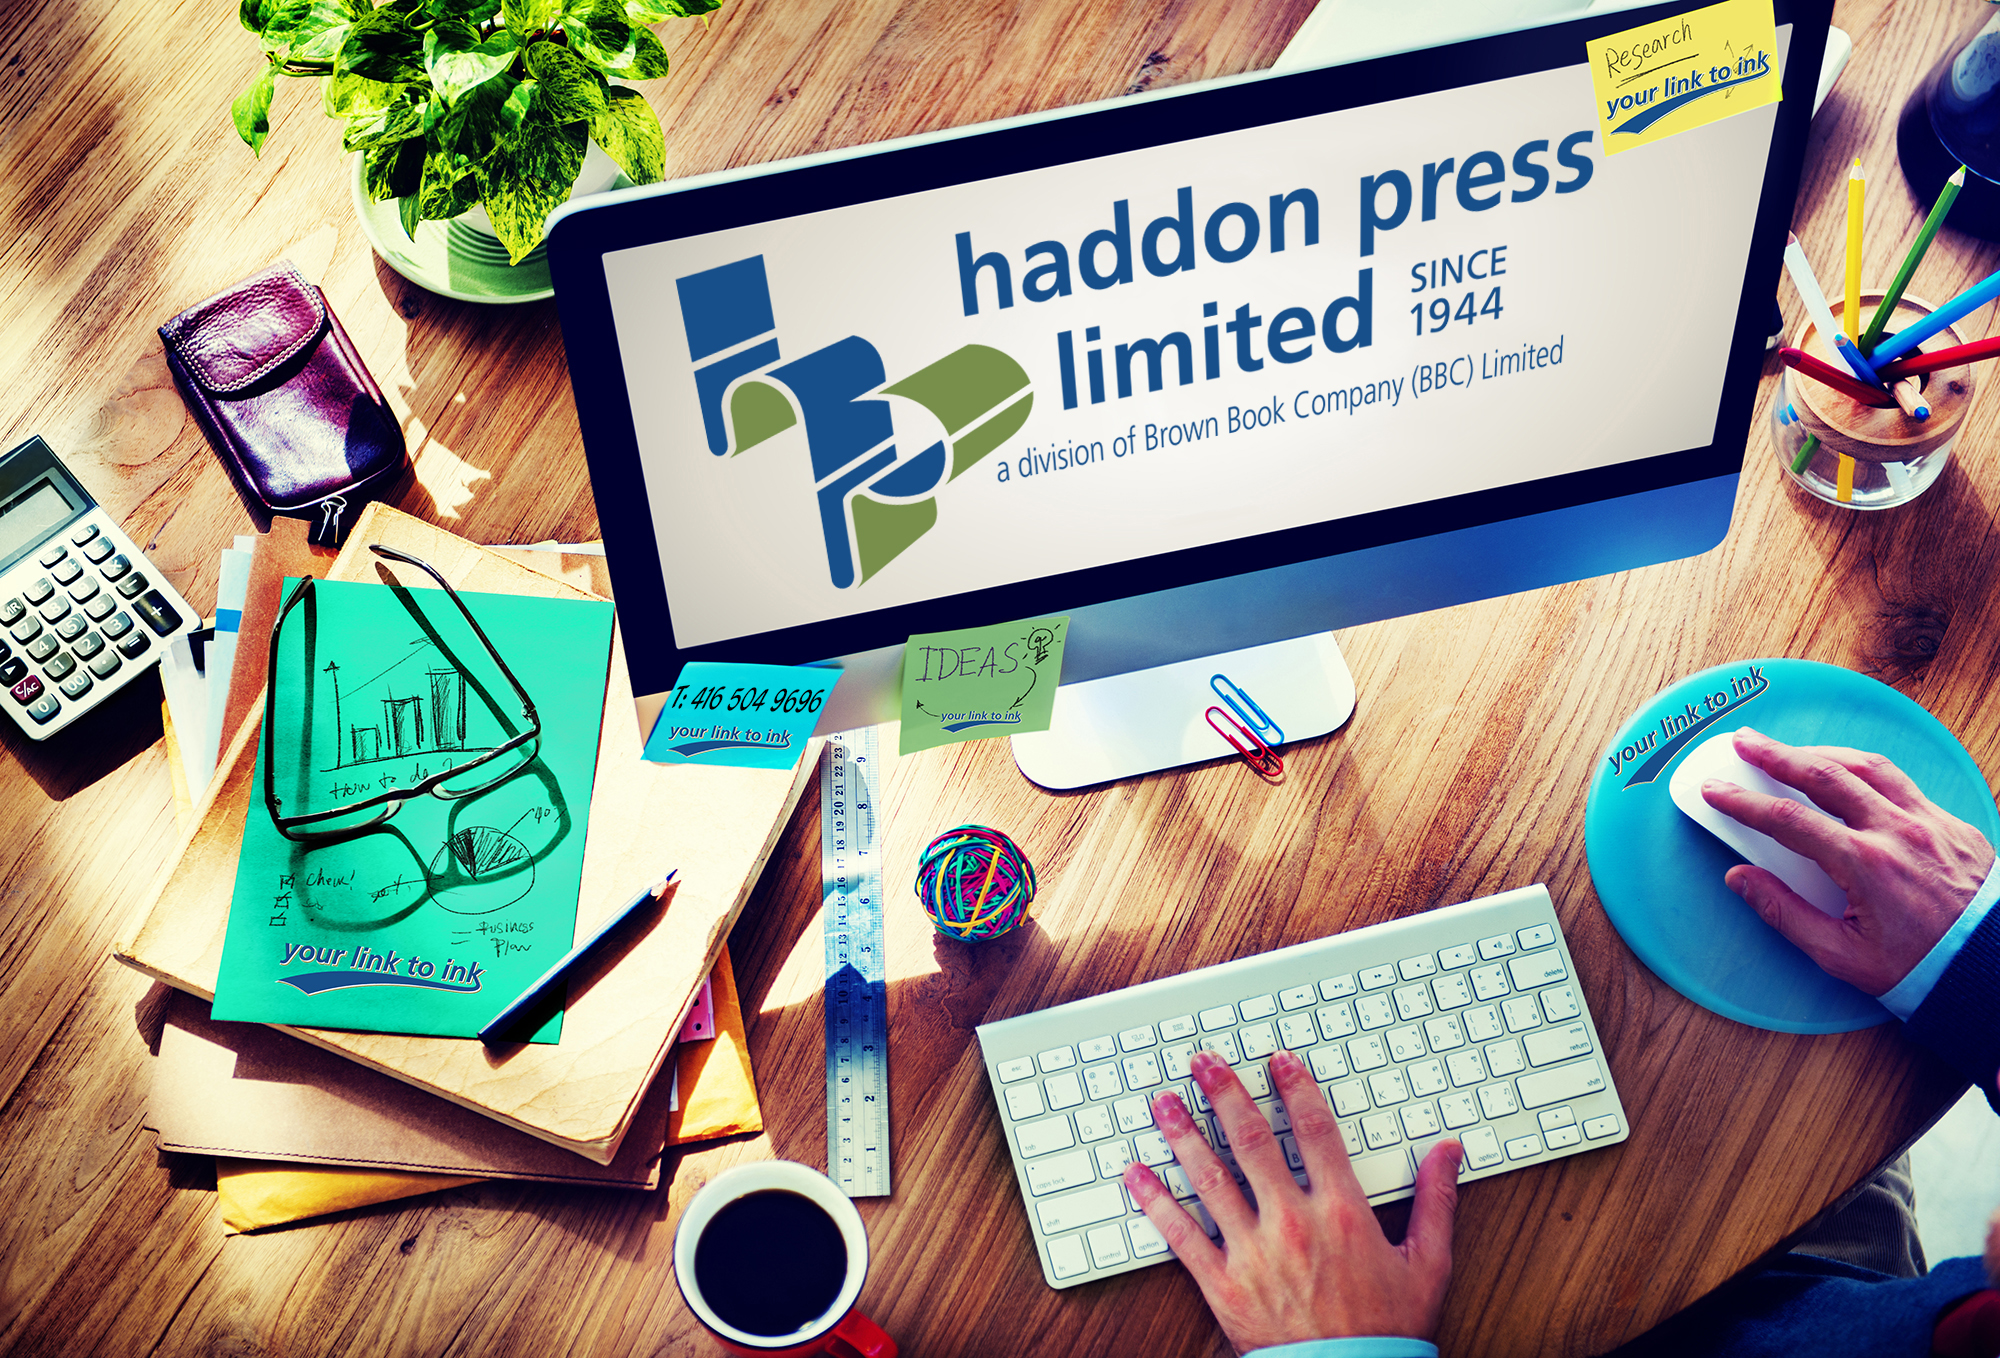 Haddon Press